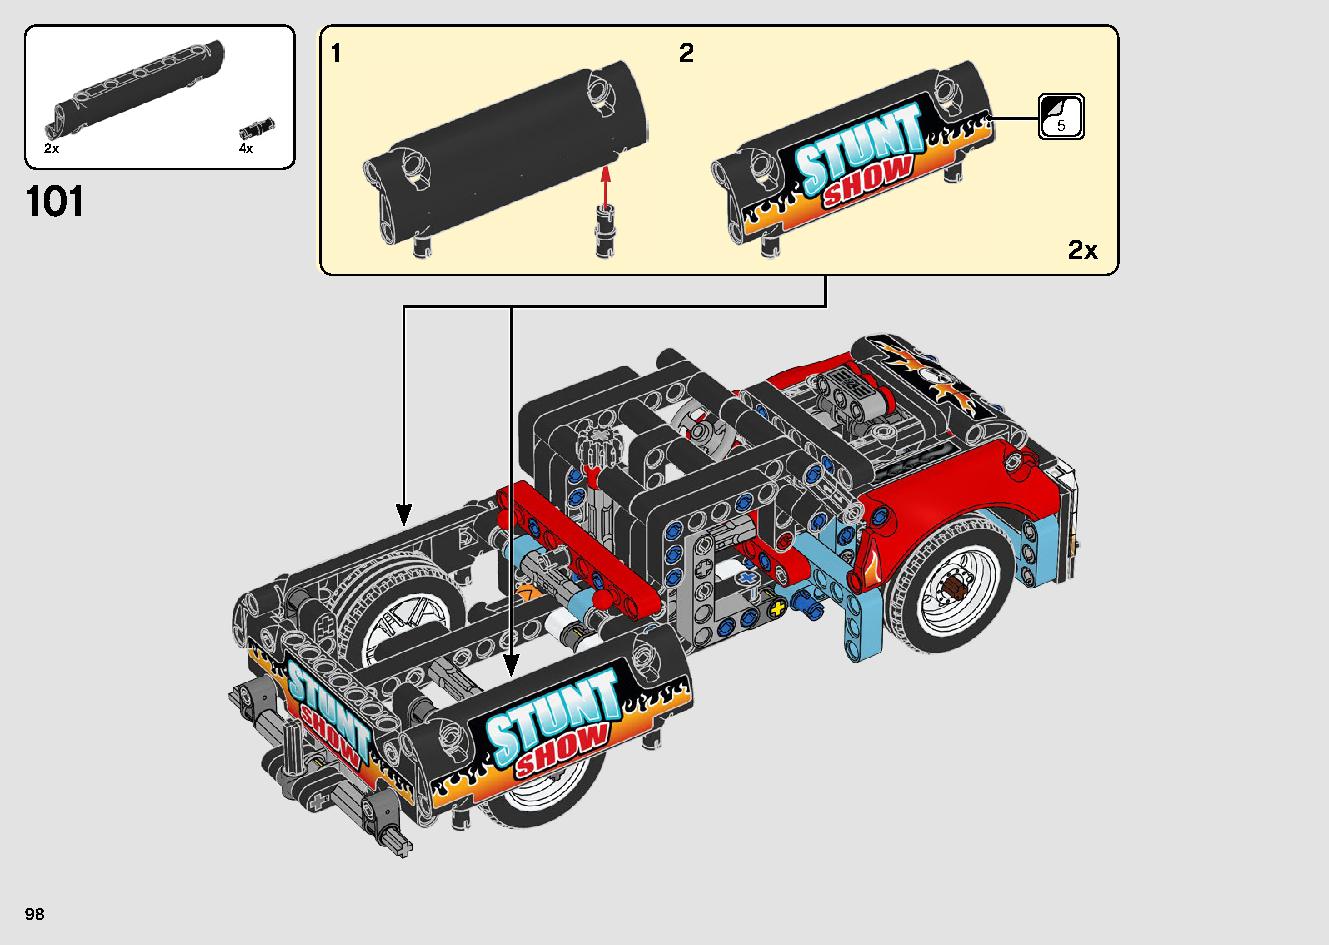 Stunt Show Truck & Bike 42106 LEGO information LEGO instructions 98 page